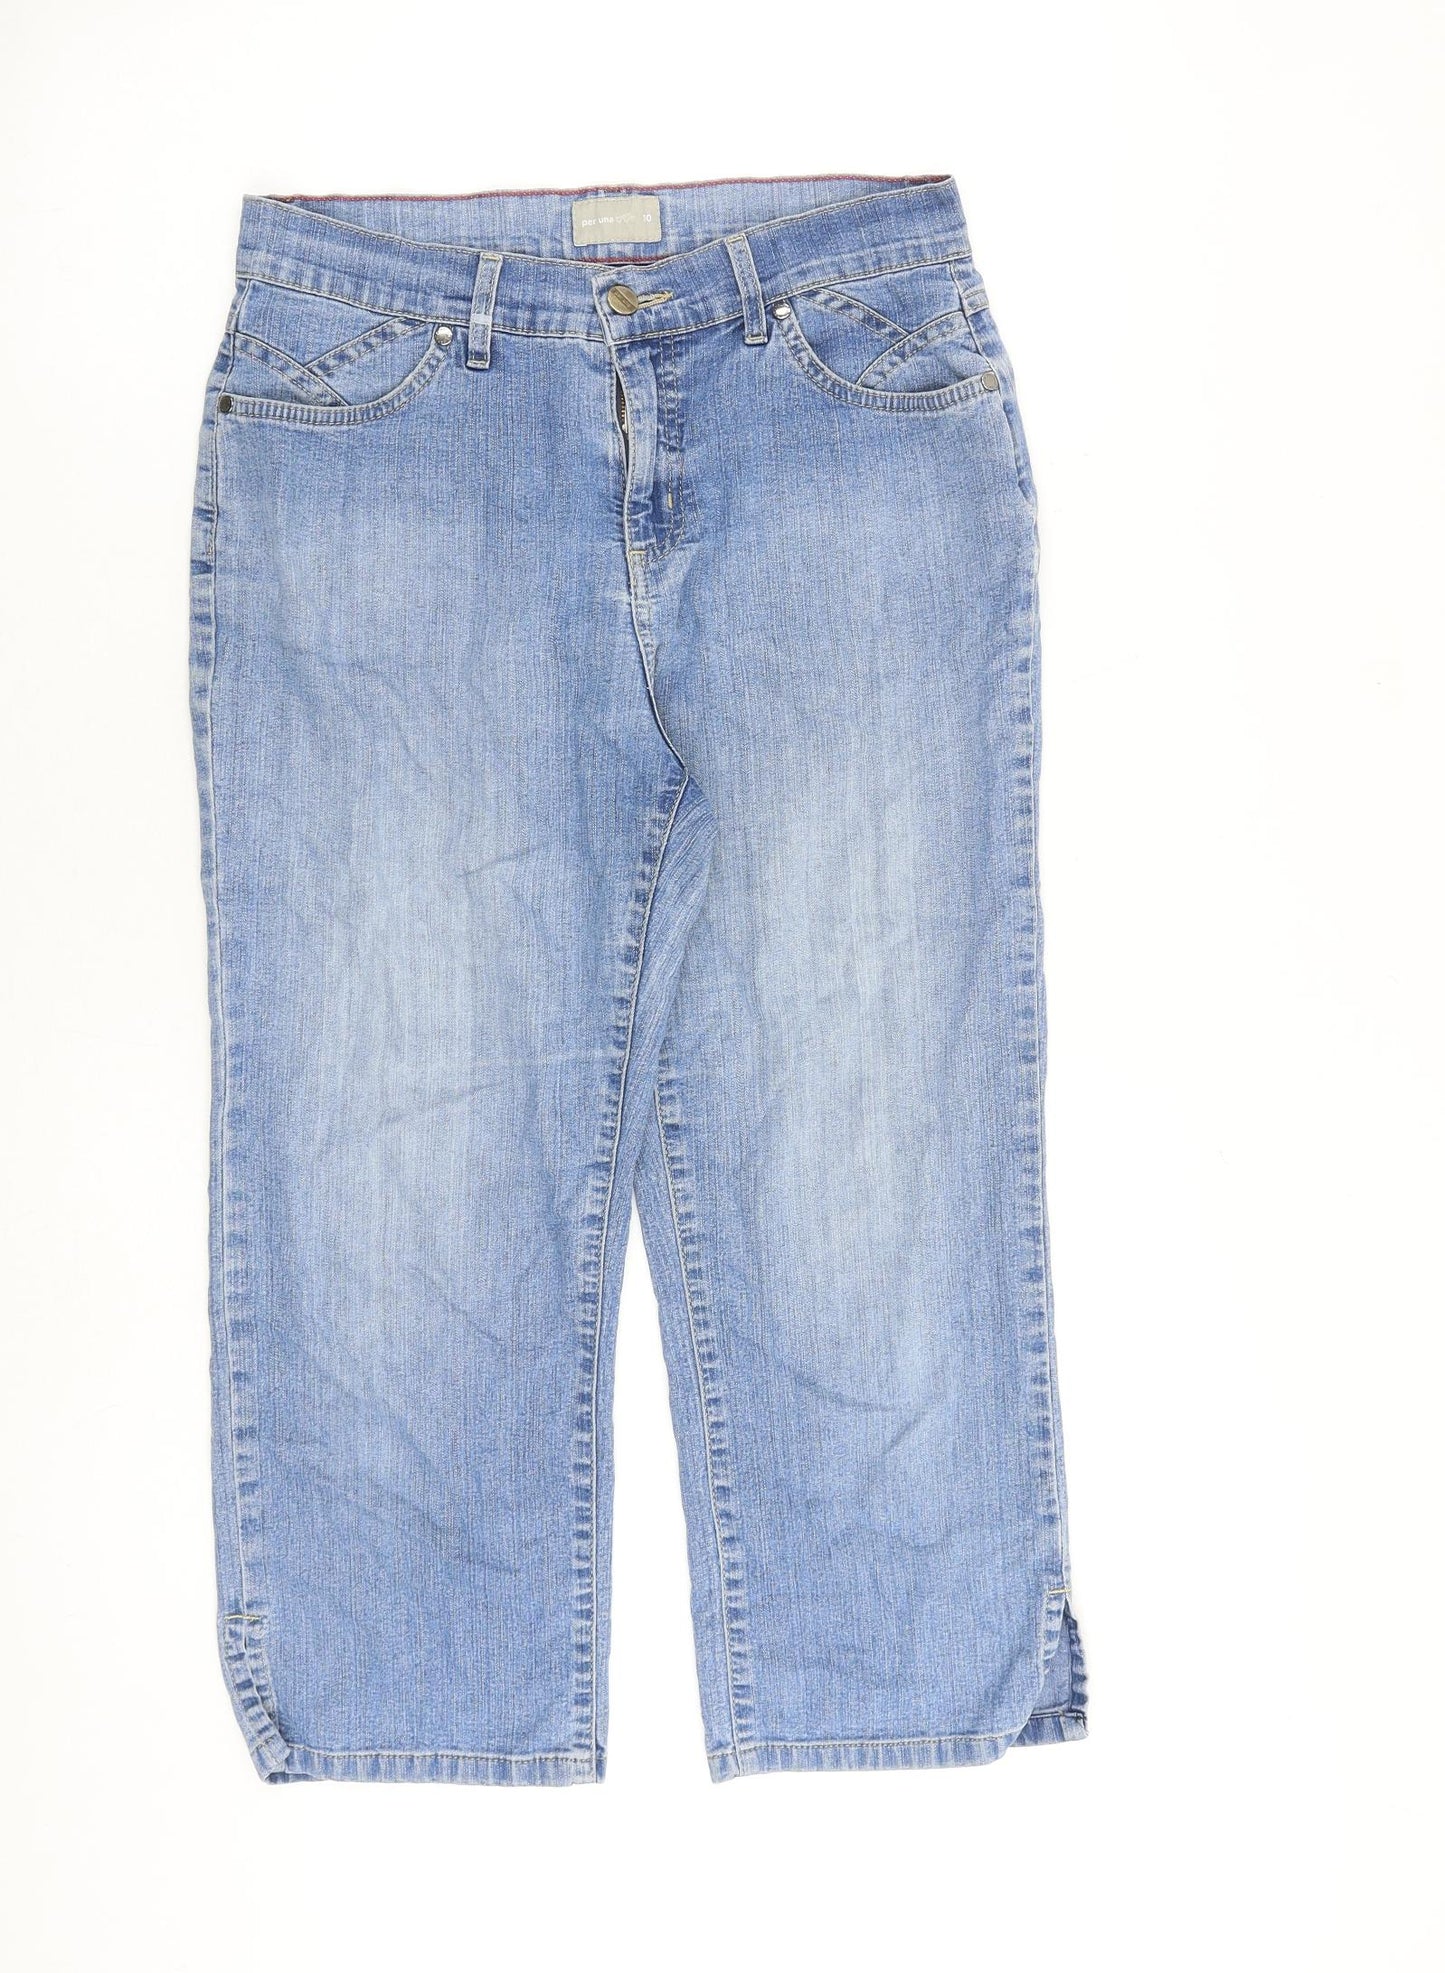 Per Una Womens Blue Cotton Straight Jeans Size 10 L23 in Regular Zip